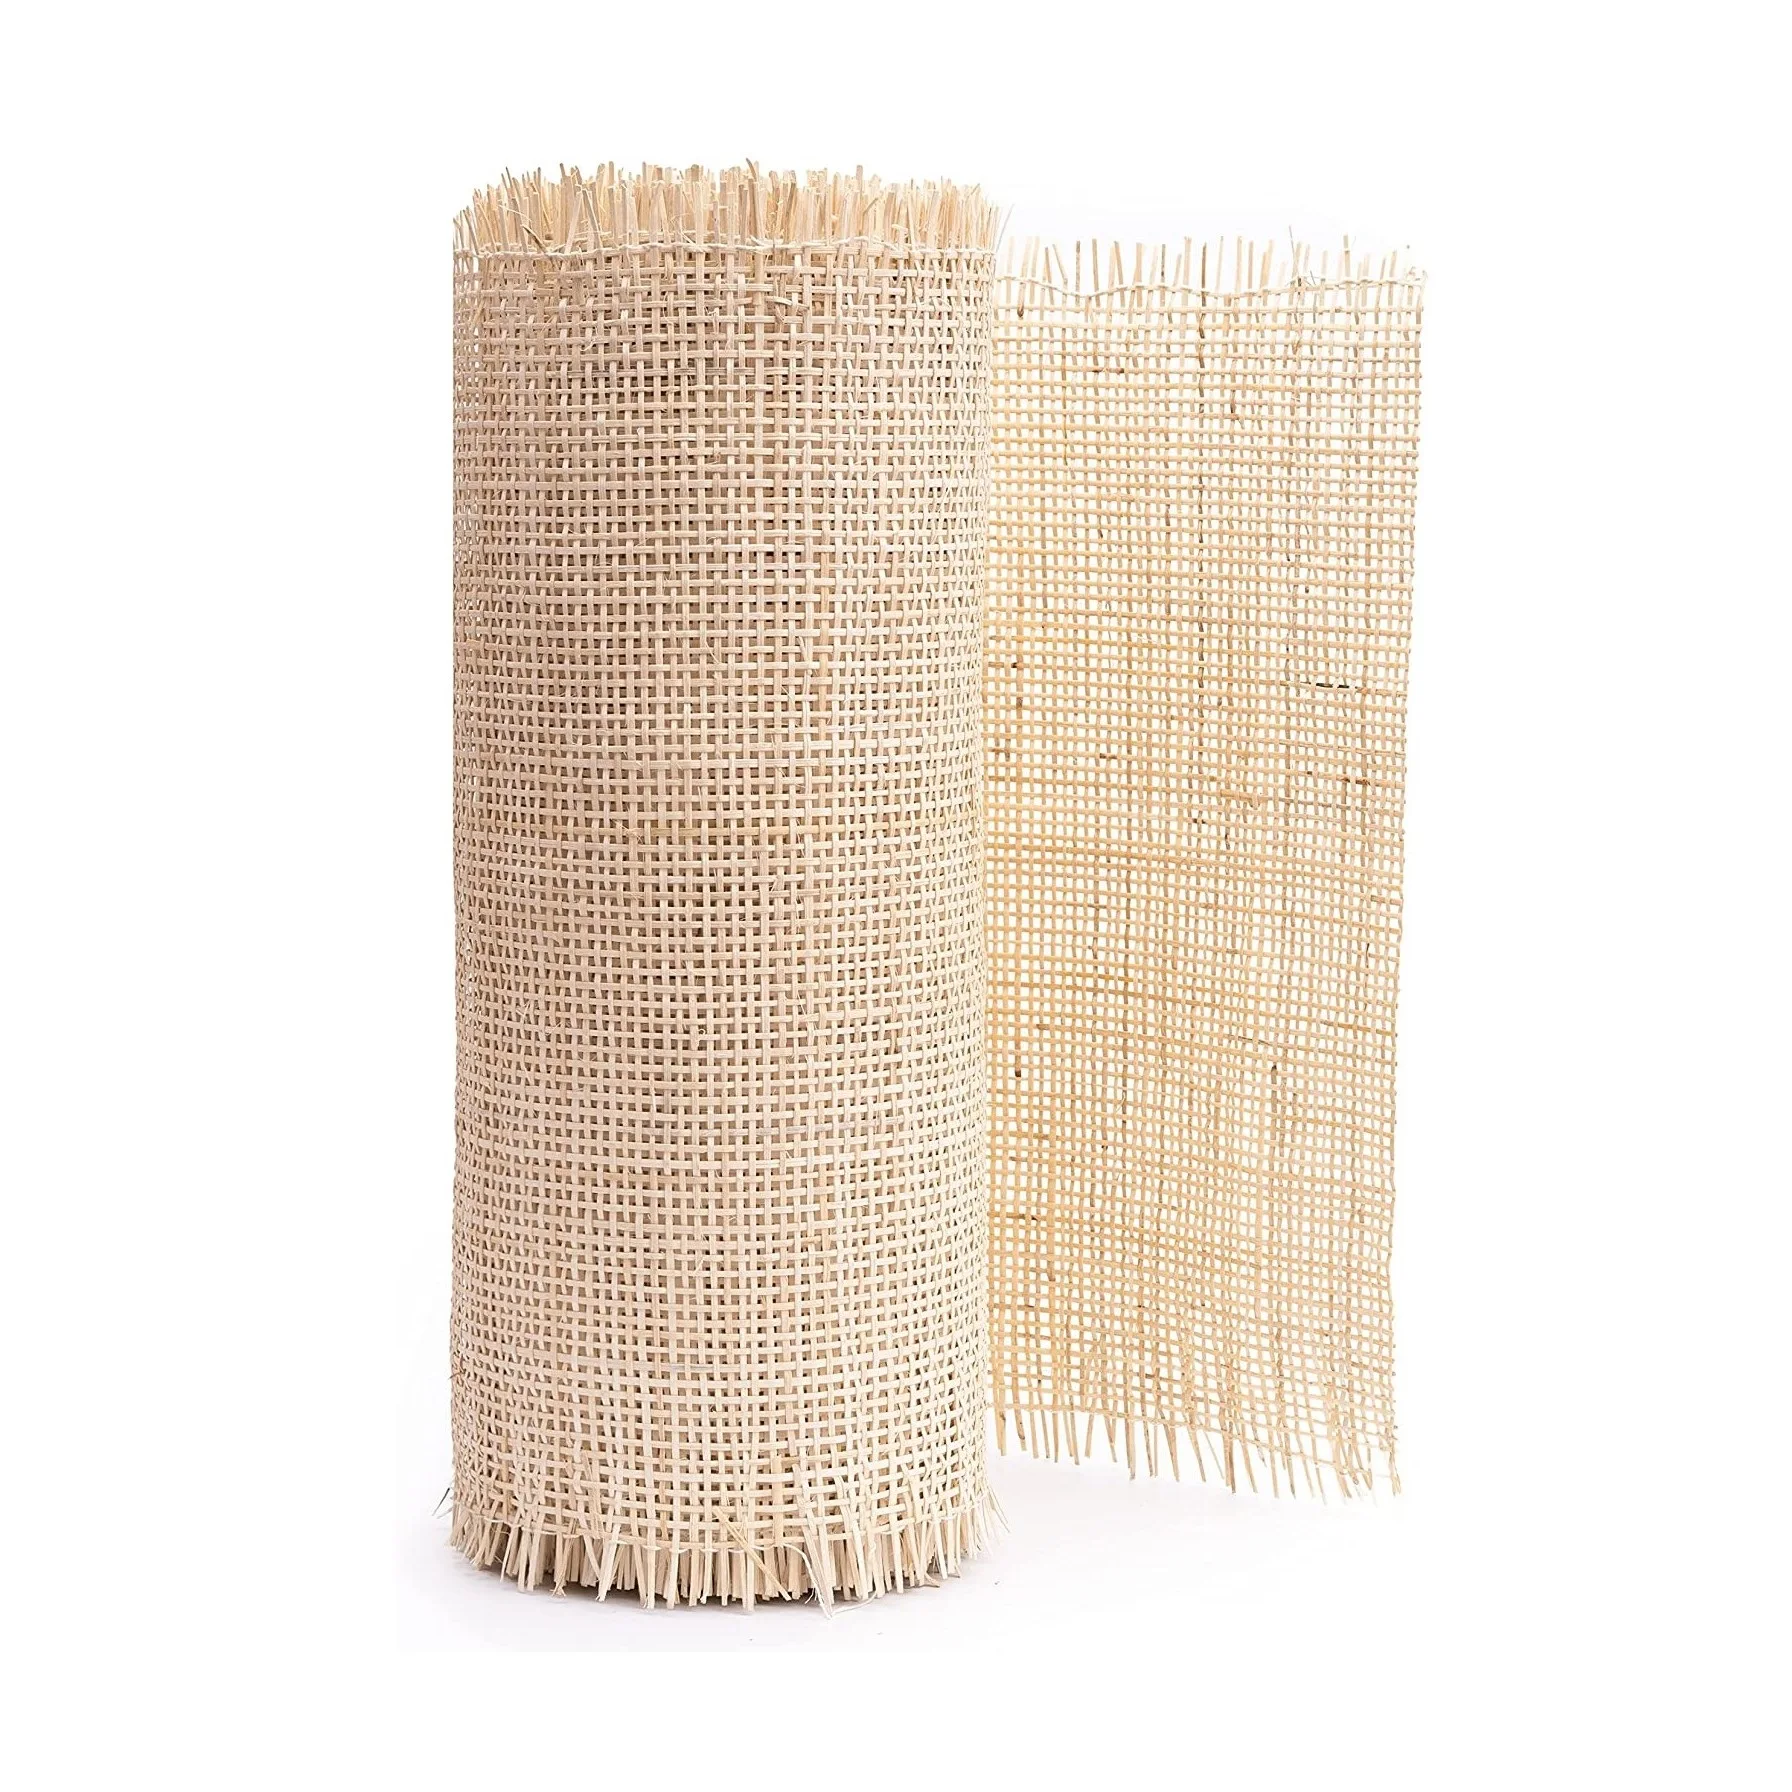 Vietnam factory price open rattan webbing mesh cane high quality